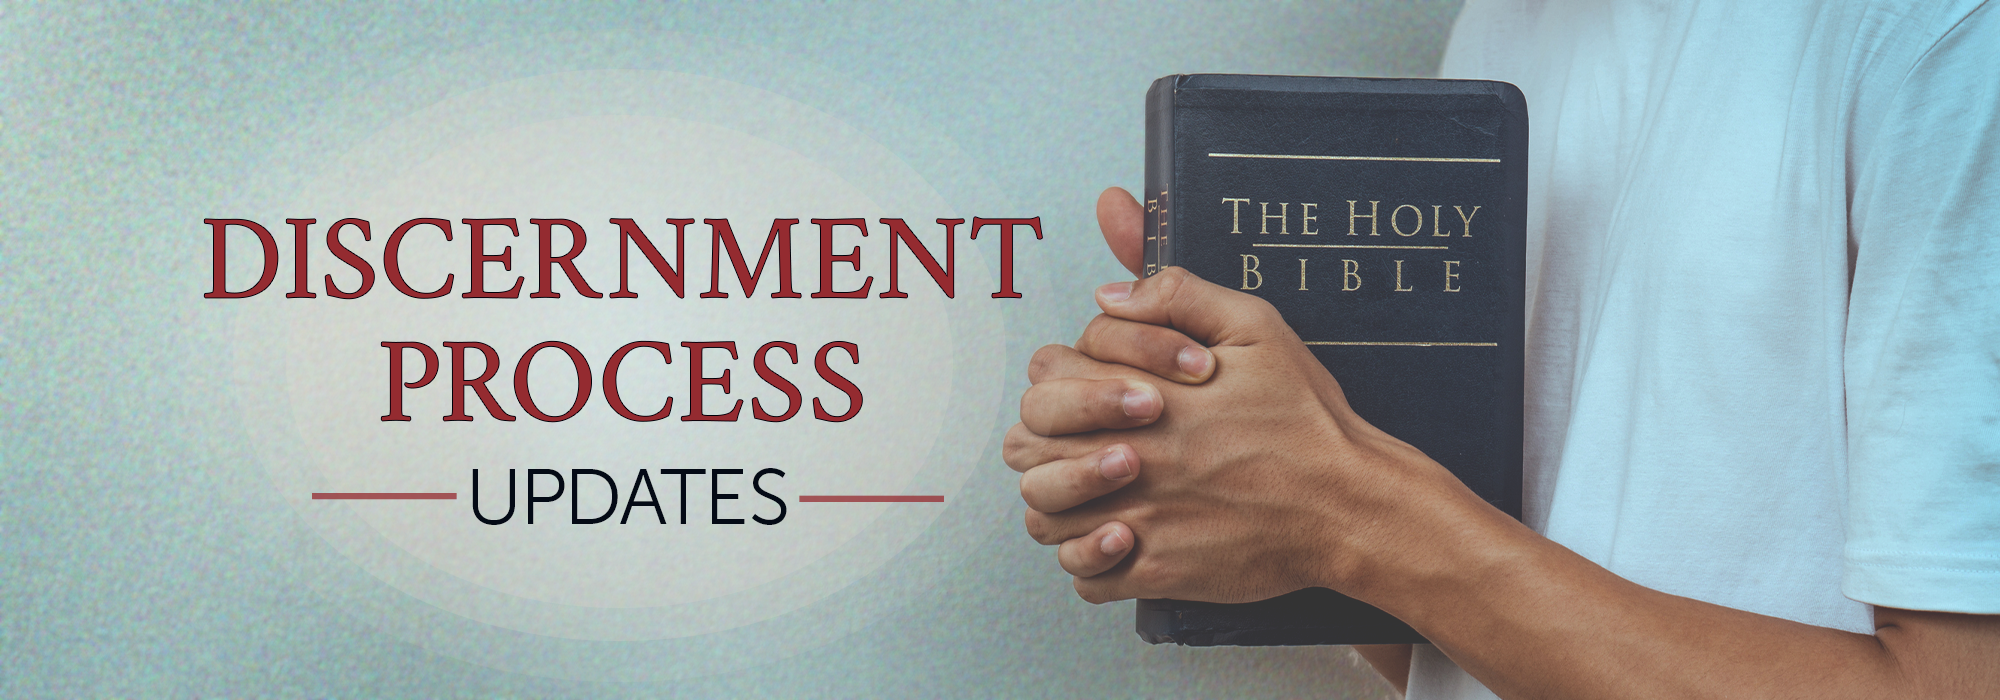 Discernment Process Updates